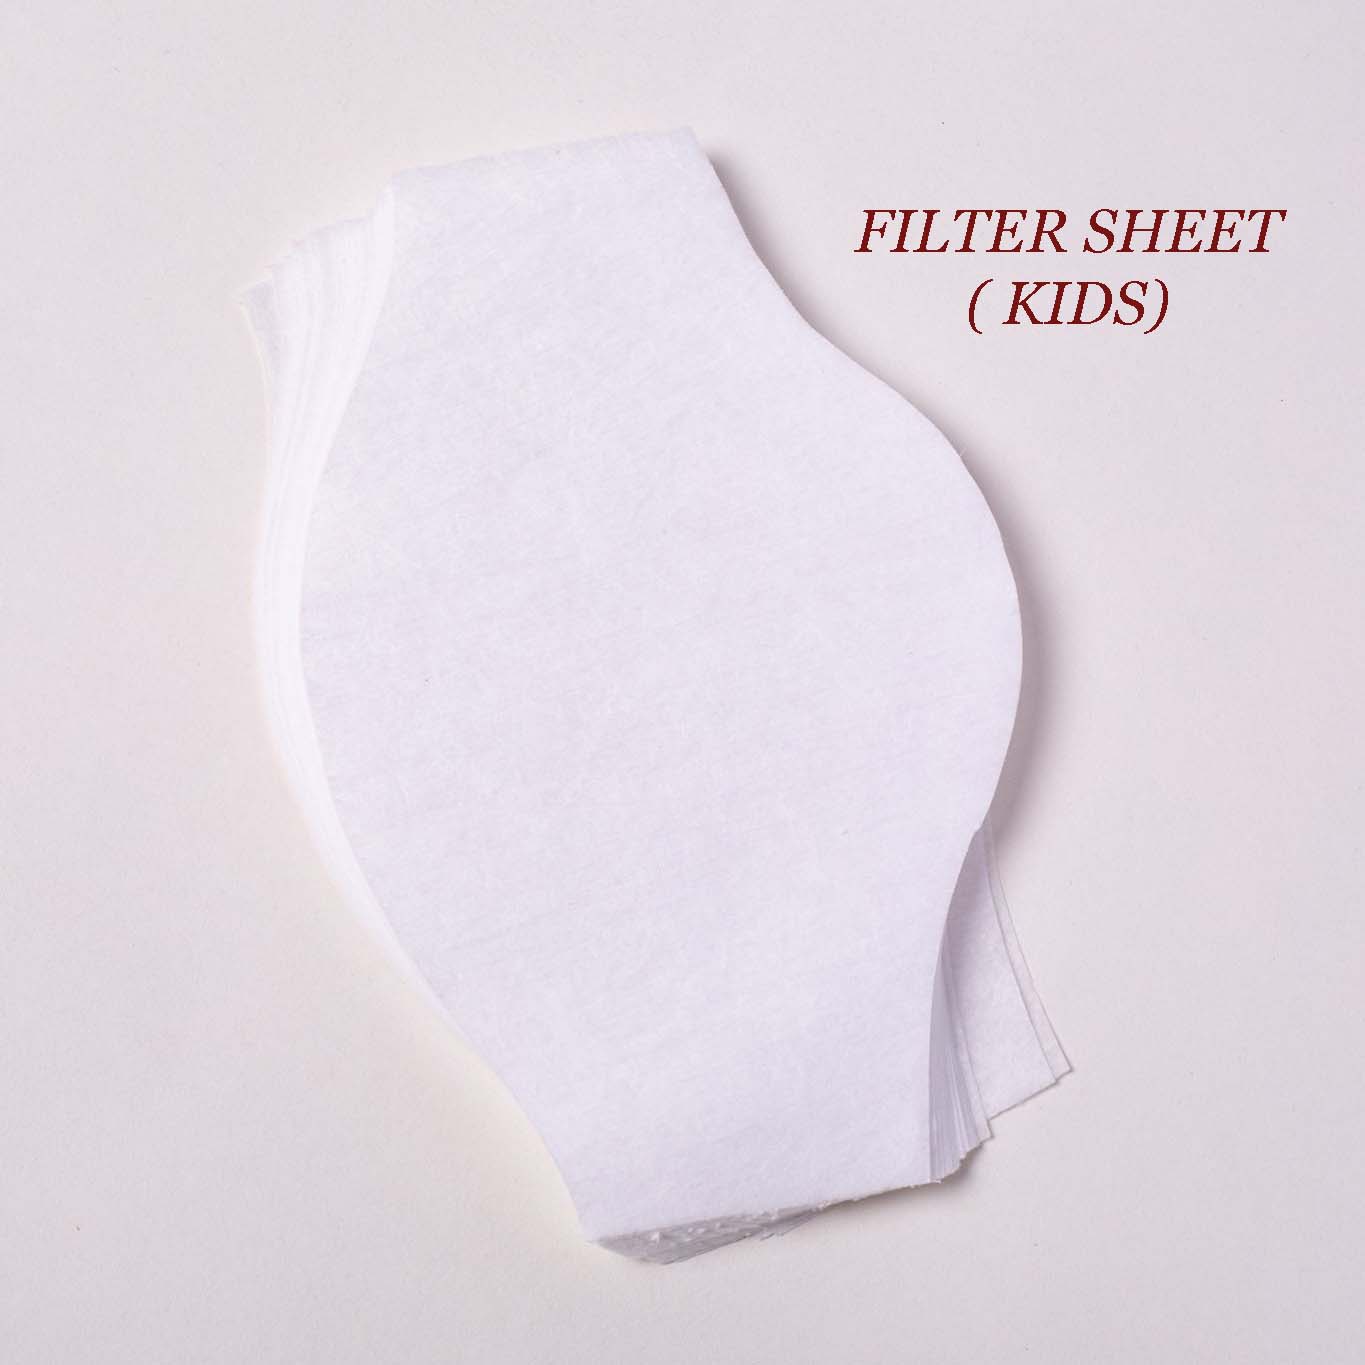 Reusable Mask Filter Sheet Kids